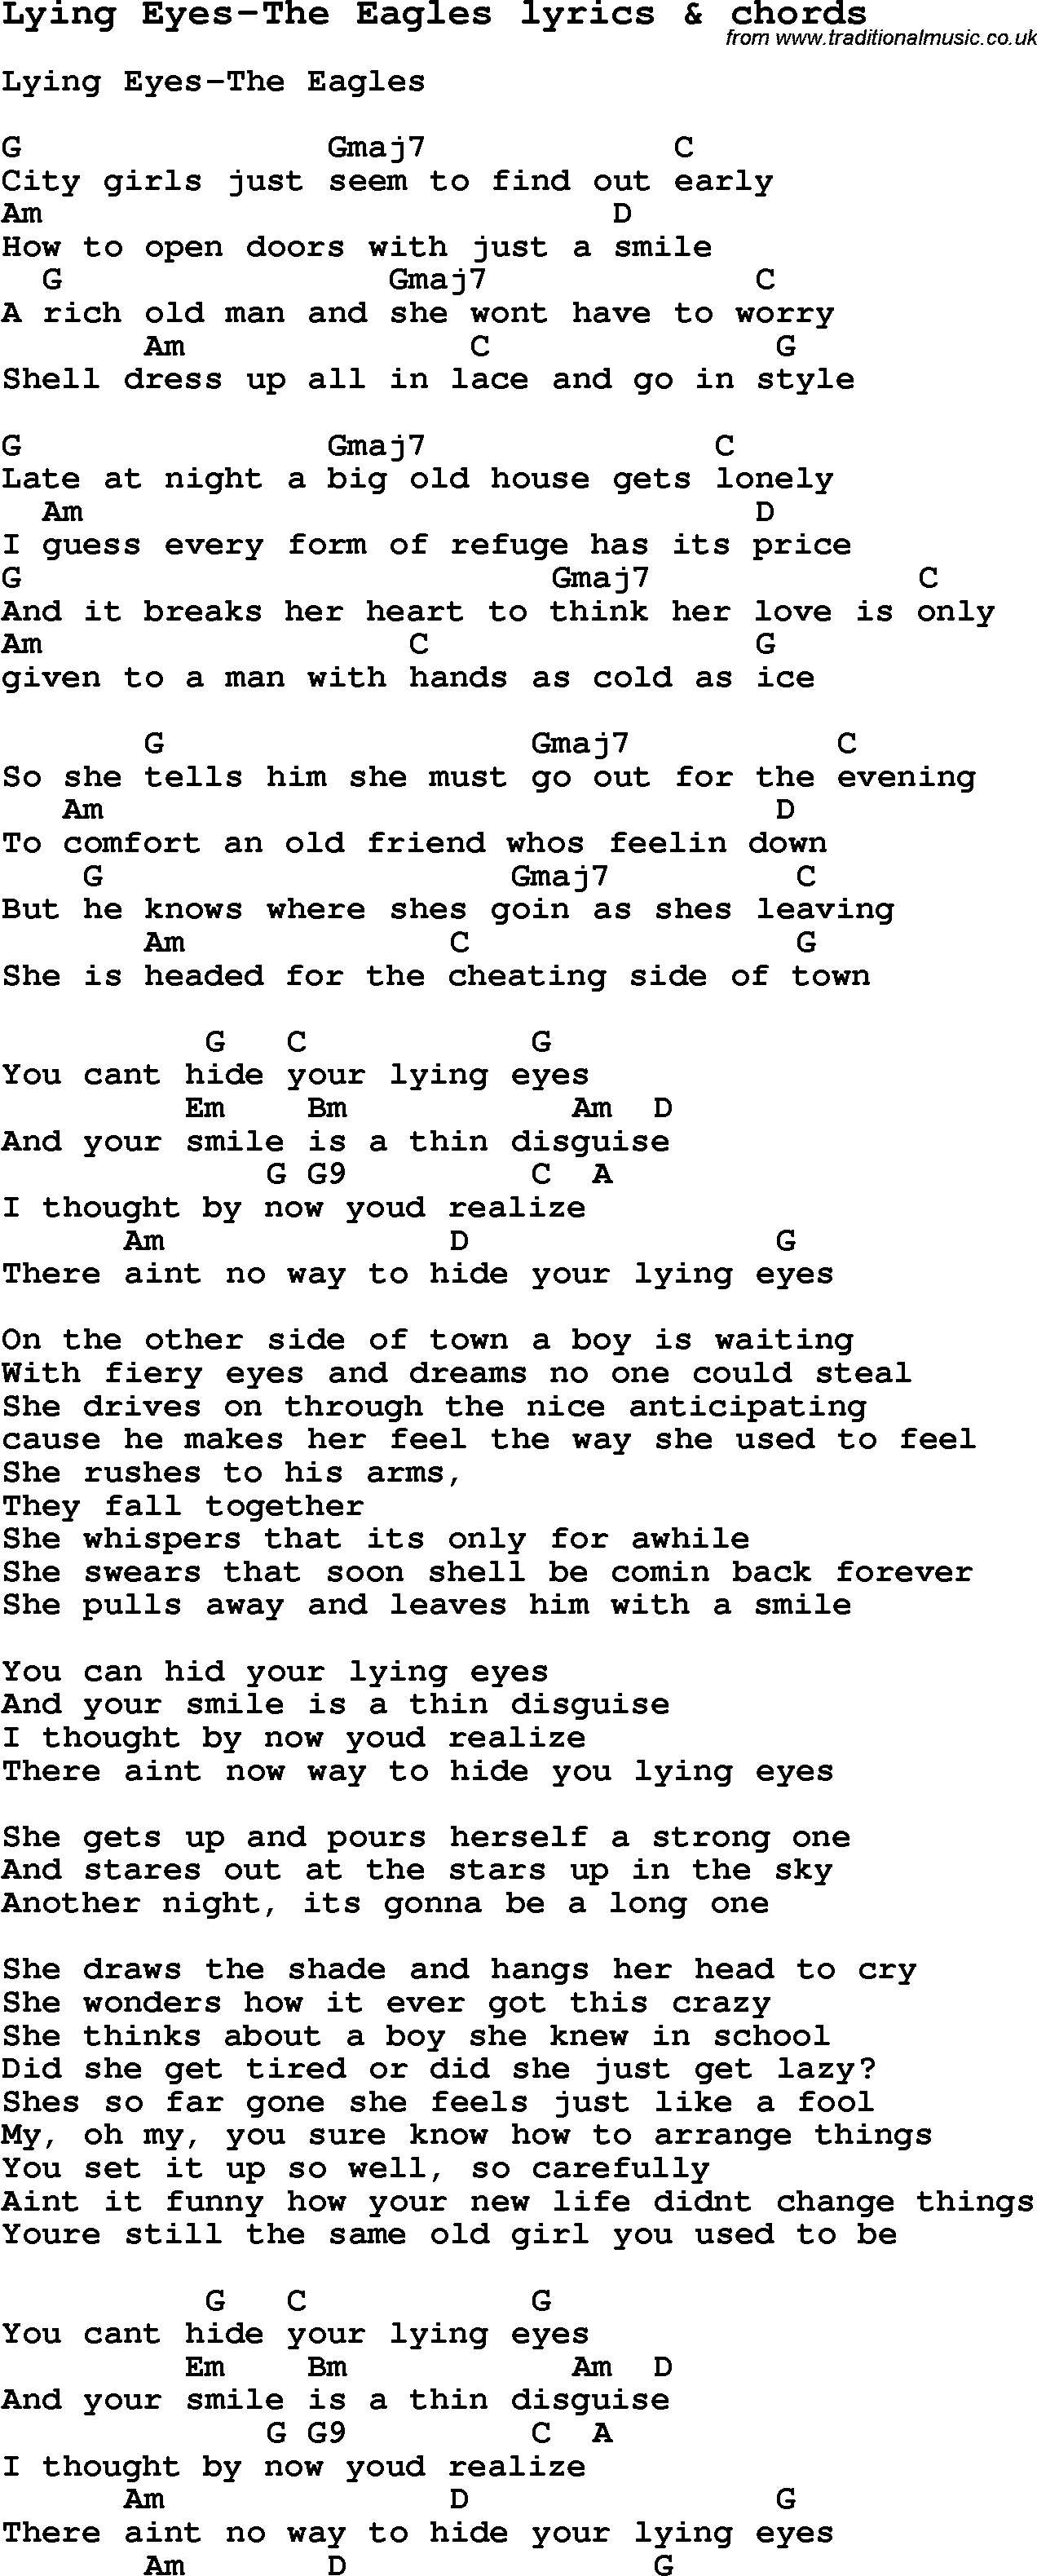 Love Song Lyrics for: Lying Eyes-The Eagles with chords for Ukulele, Guitar Banjo etc.